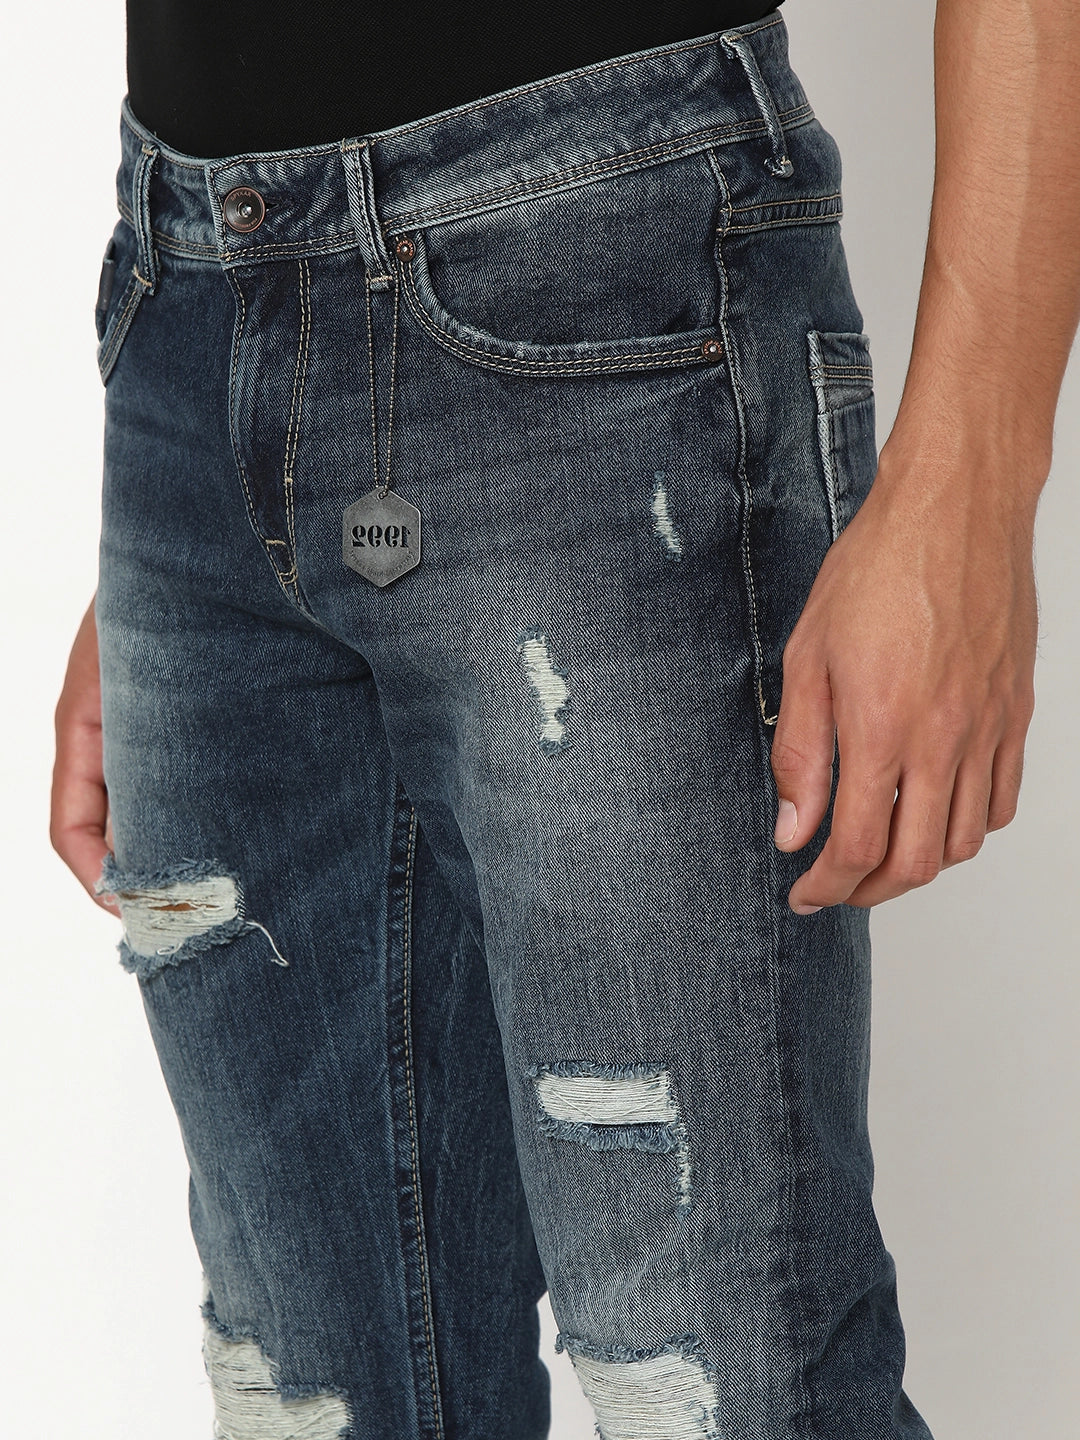 Spykar Men Vintage Blue Cotton Slim Fit Narrow Length Low Distressed Low Rise Stretchable Jeans (Skinny)